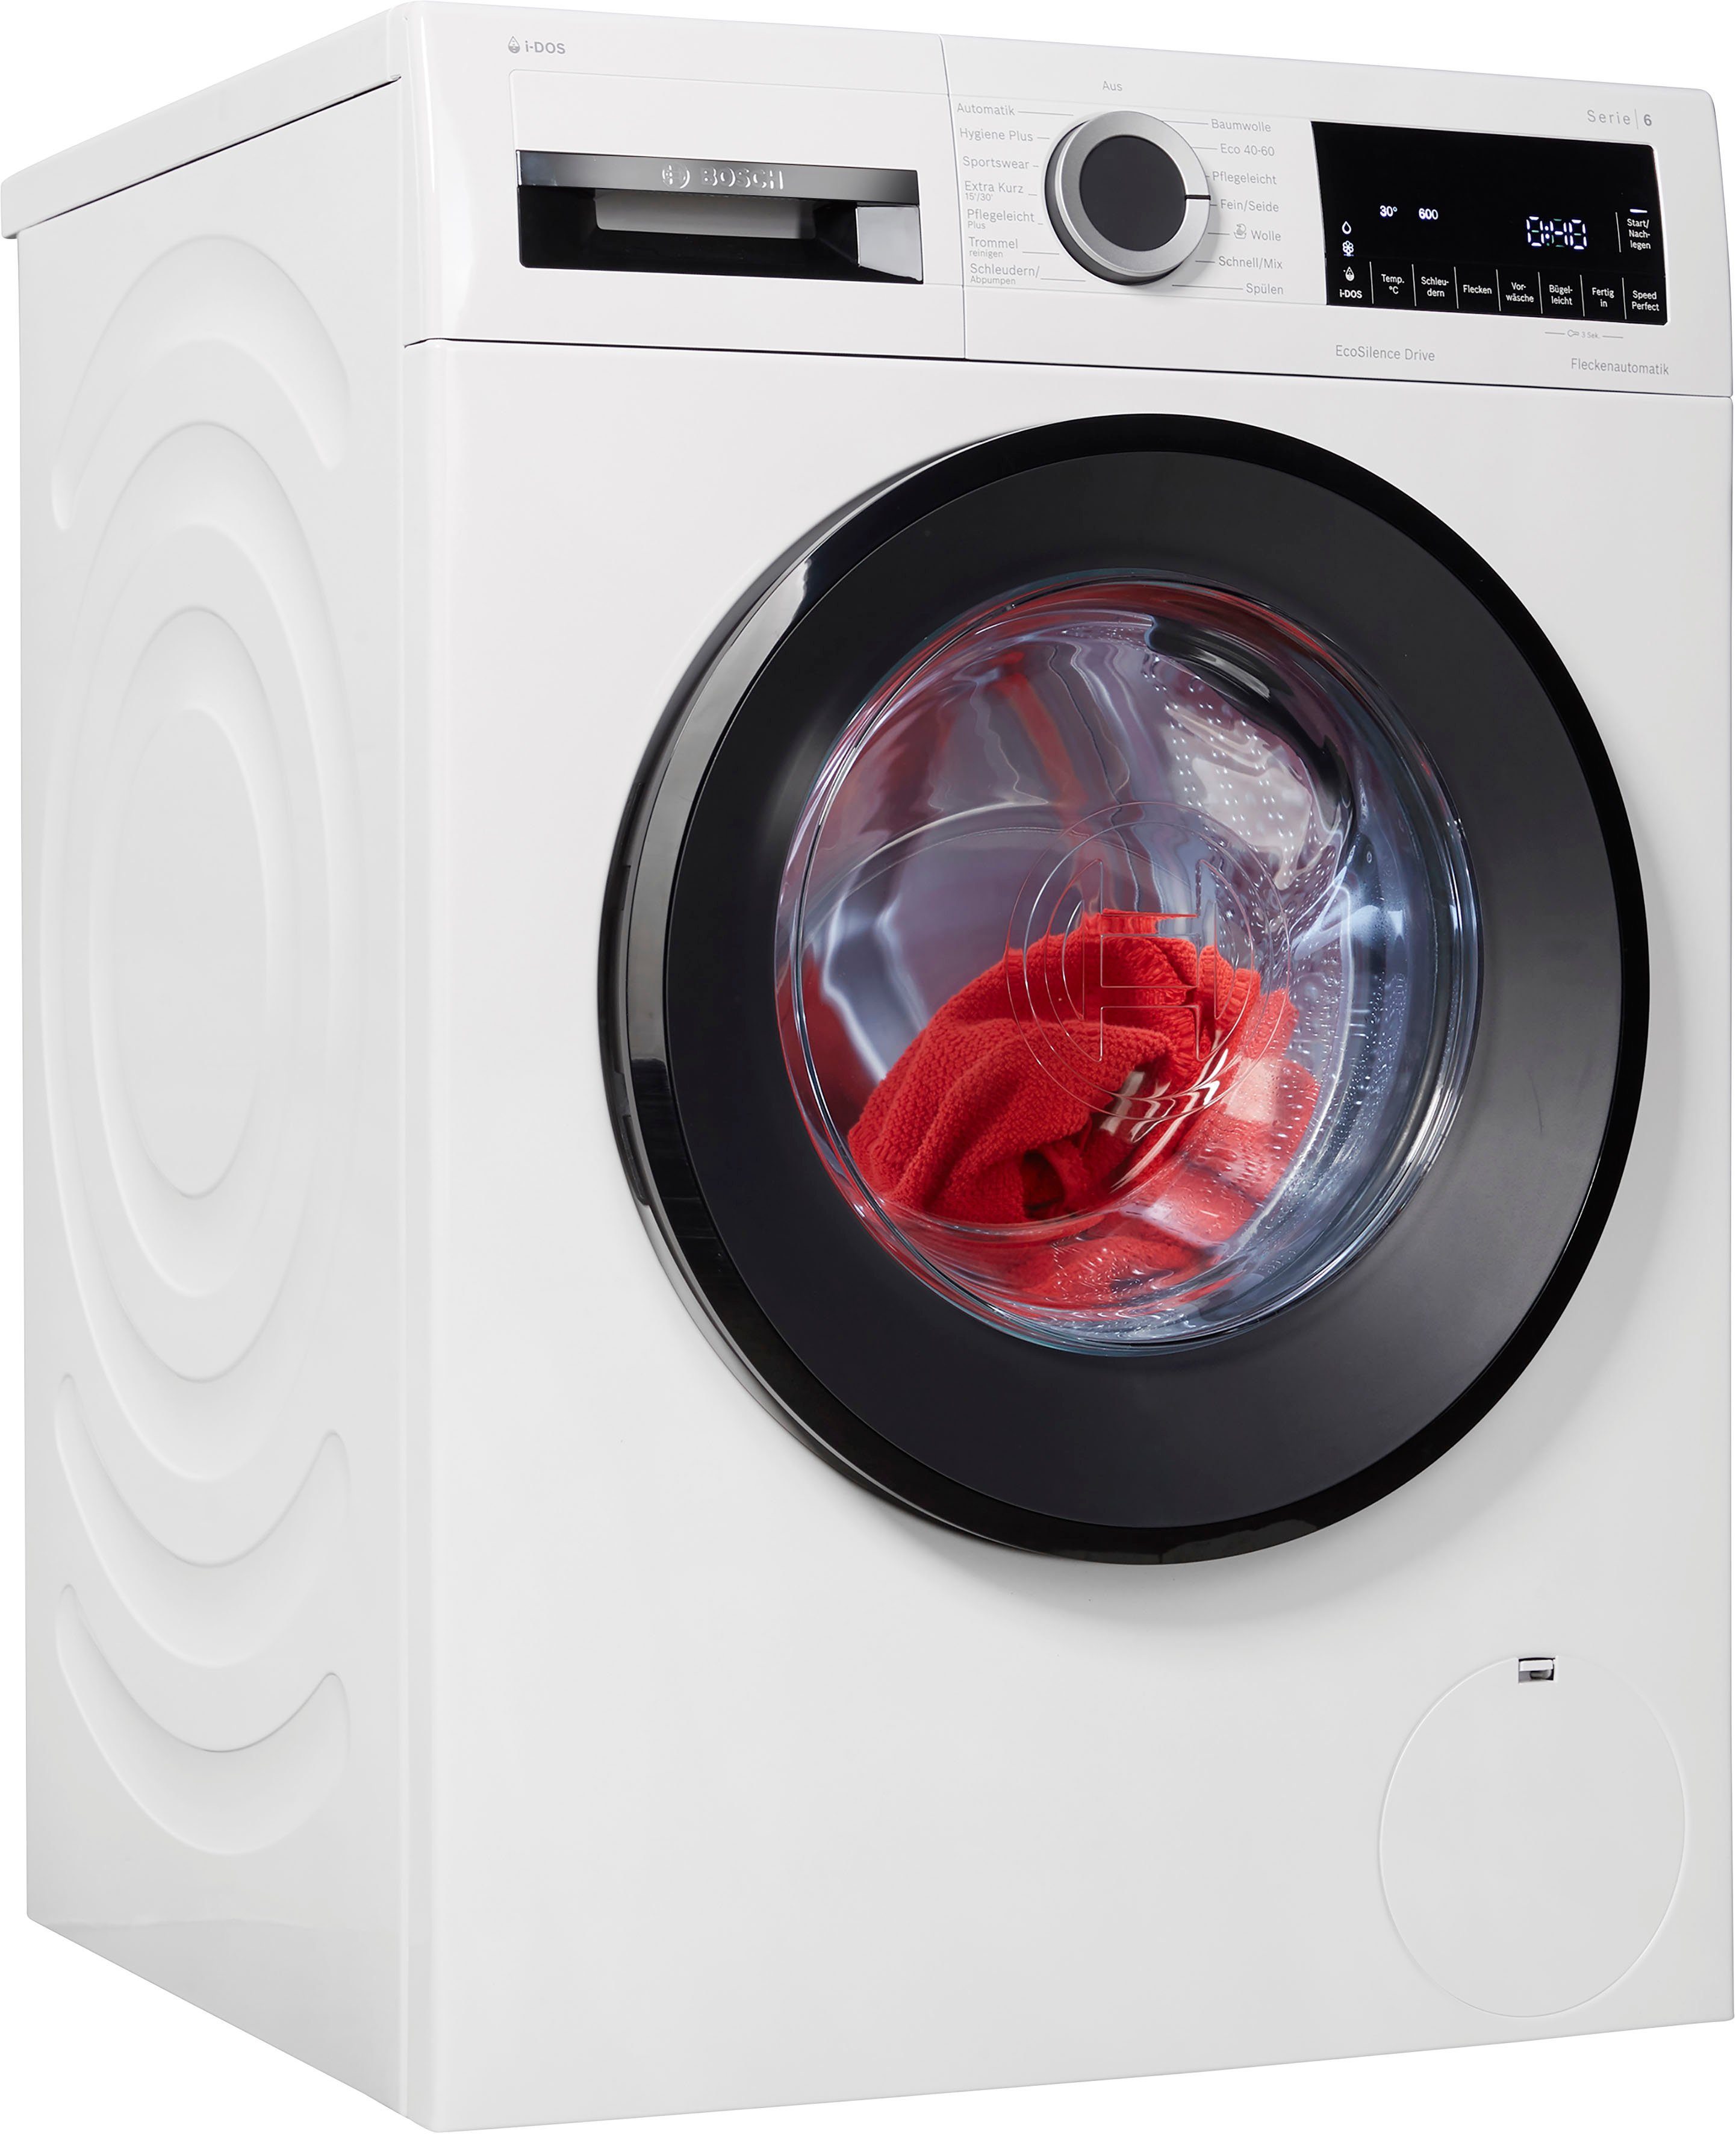 BOSCH Waschmaschine WGG154A20, U/min kg, 10 1400